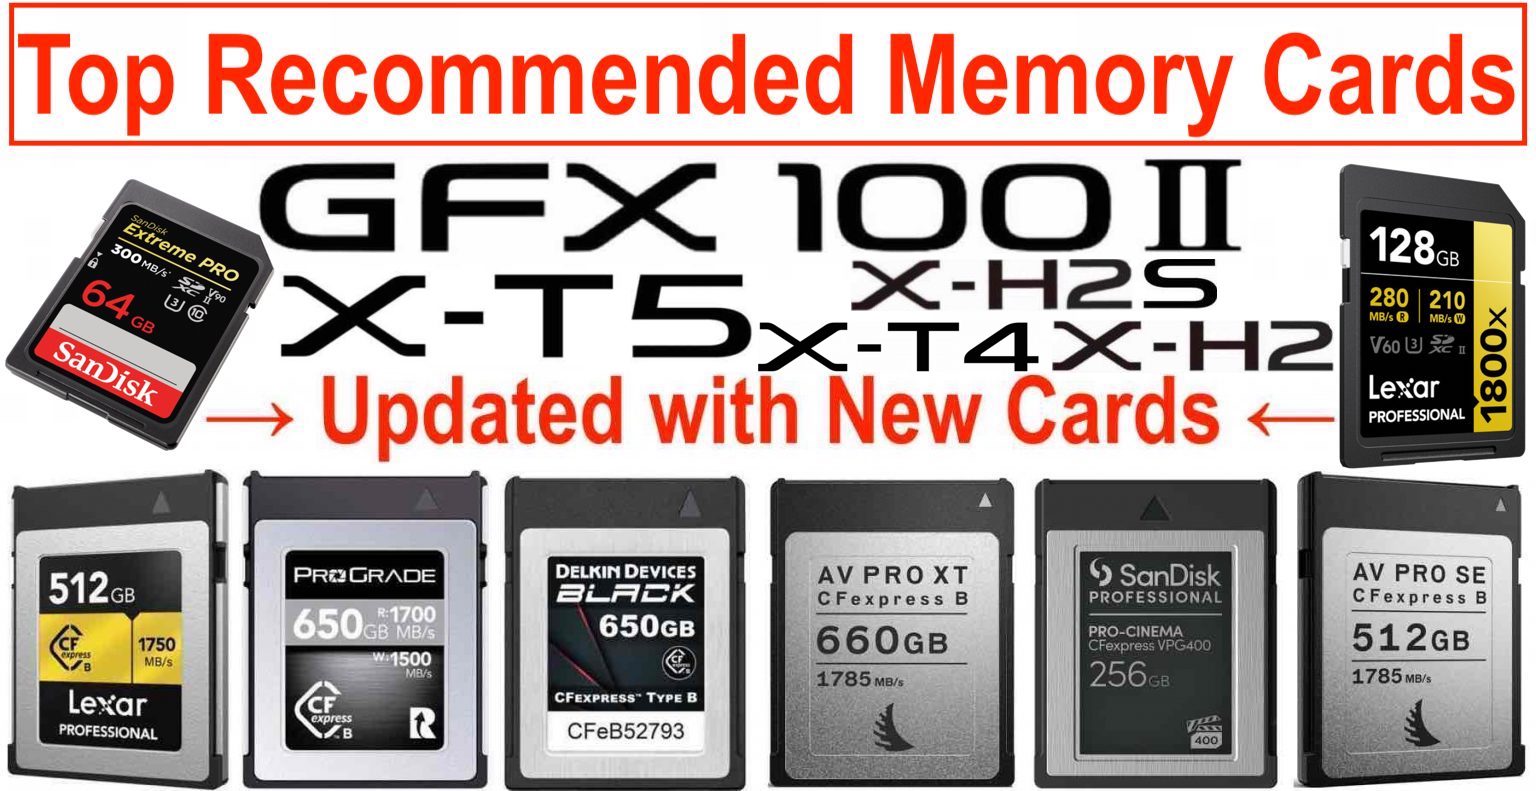 Best Memory Cards for Fujifilm GFX100 II, X-T5, X-T4, X-H2, X-H2S